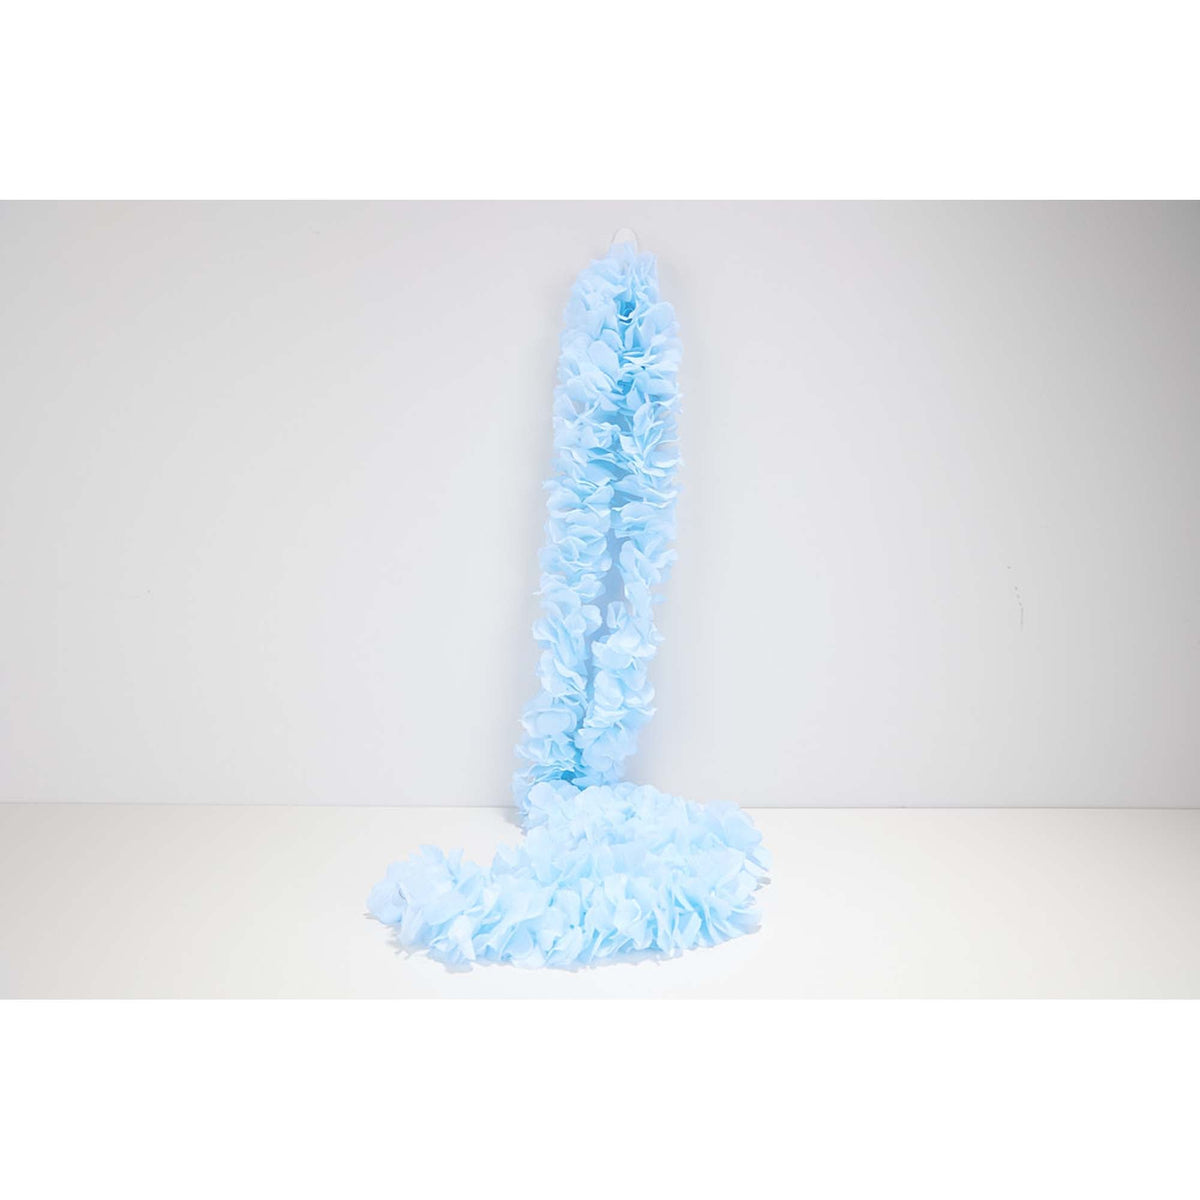 LIANGSHAN DAJON GIFTS & TOYS Theme Party Baby Blue Pastel Flower Garland, 7 Feet 601471393007